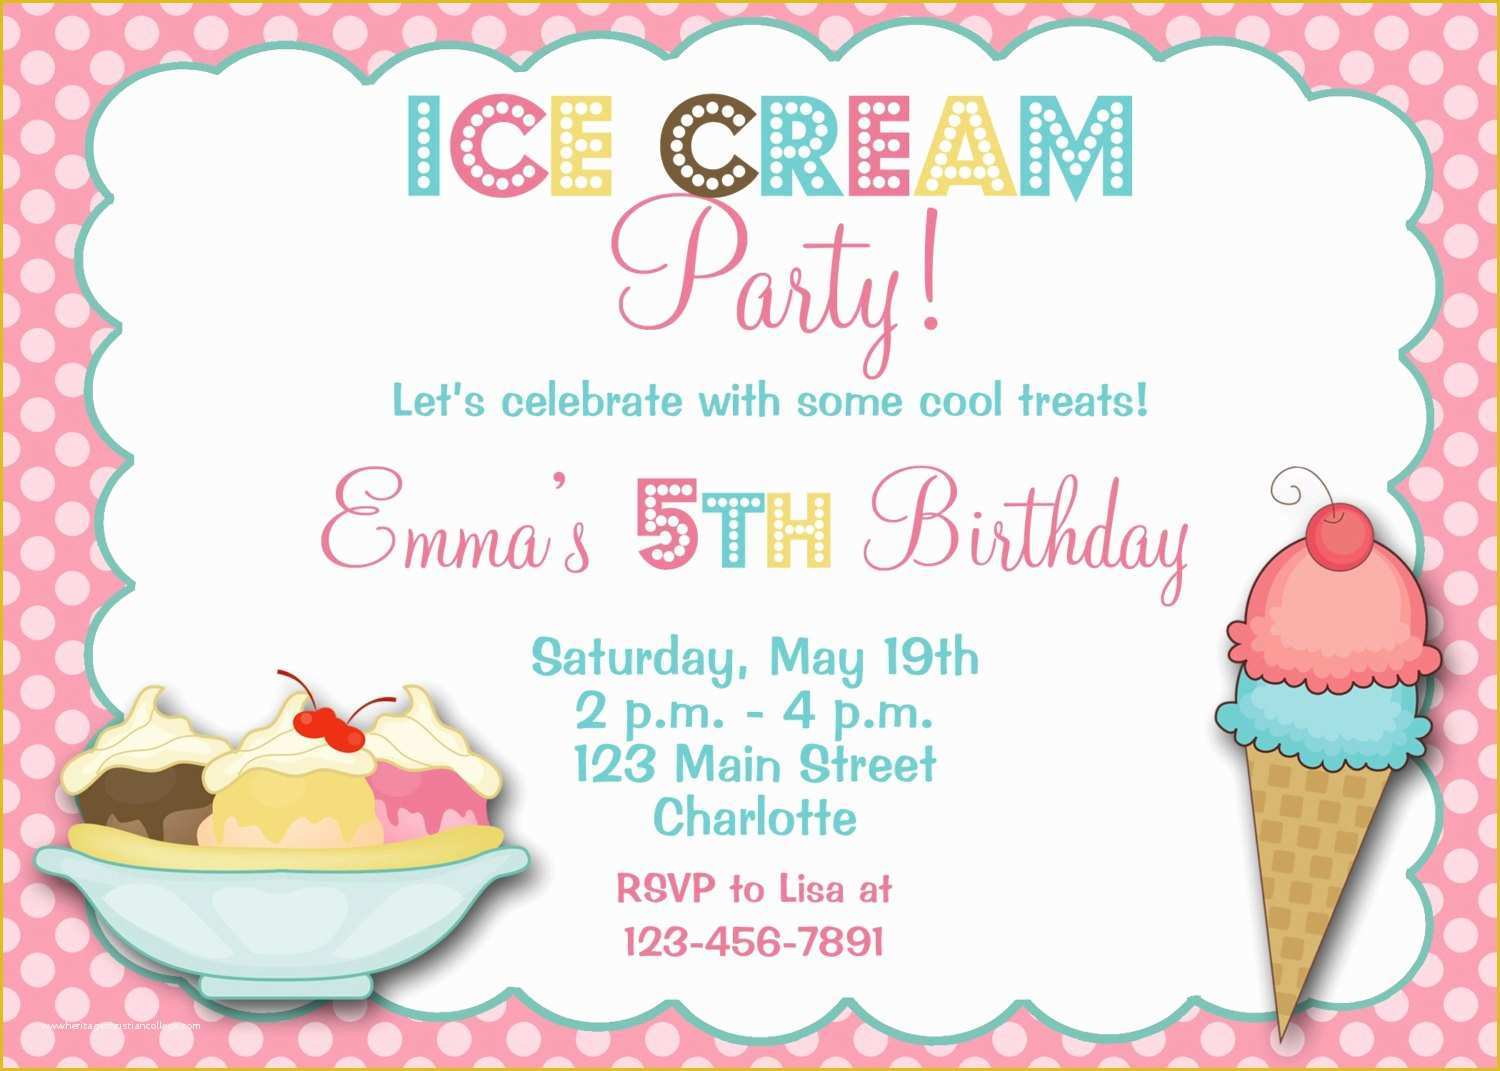 Ice Cream social Invitation Template Free Of Downloadable Ice Cream social Invitations